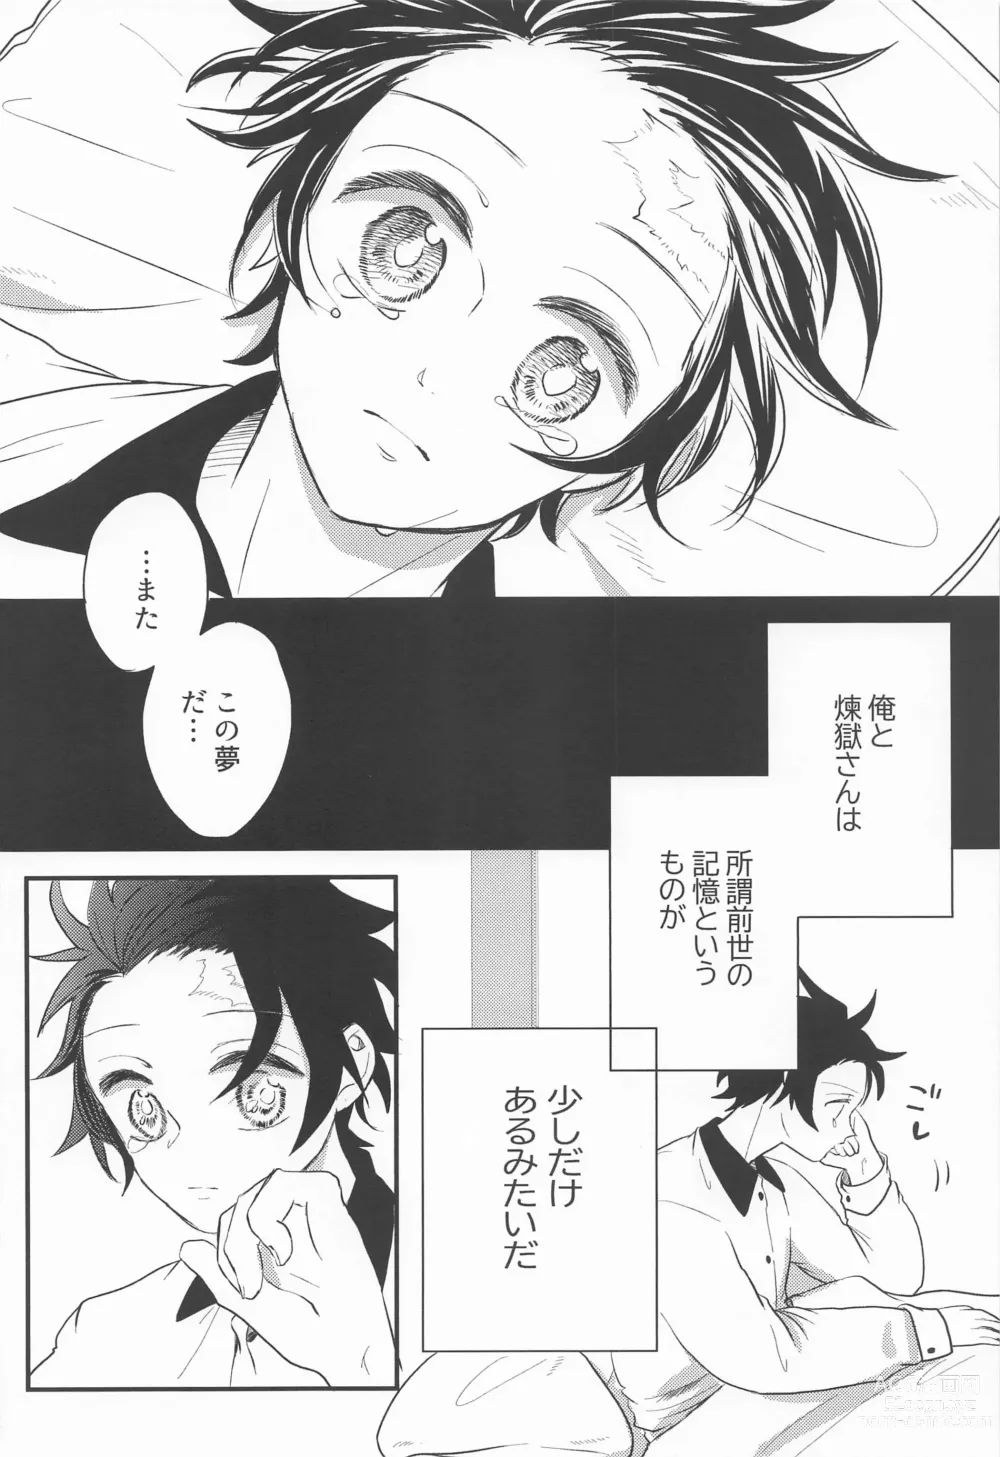 Page 3 of doujinshi Madogiwa no Rinjin To Fuyu no Hi